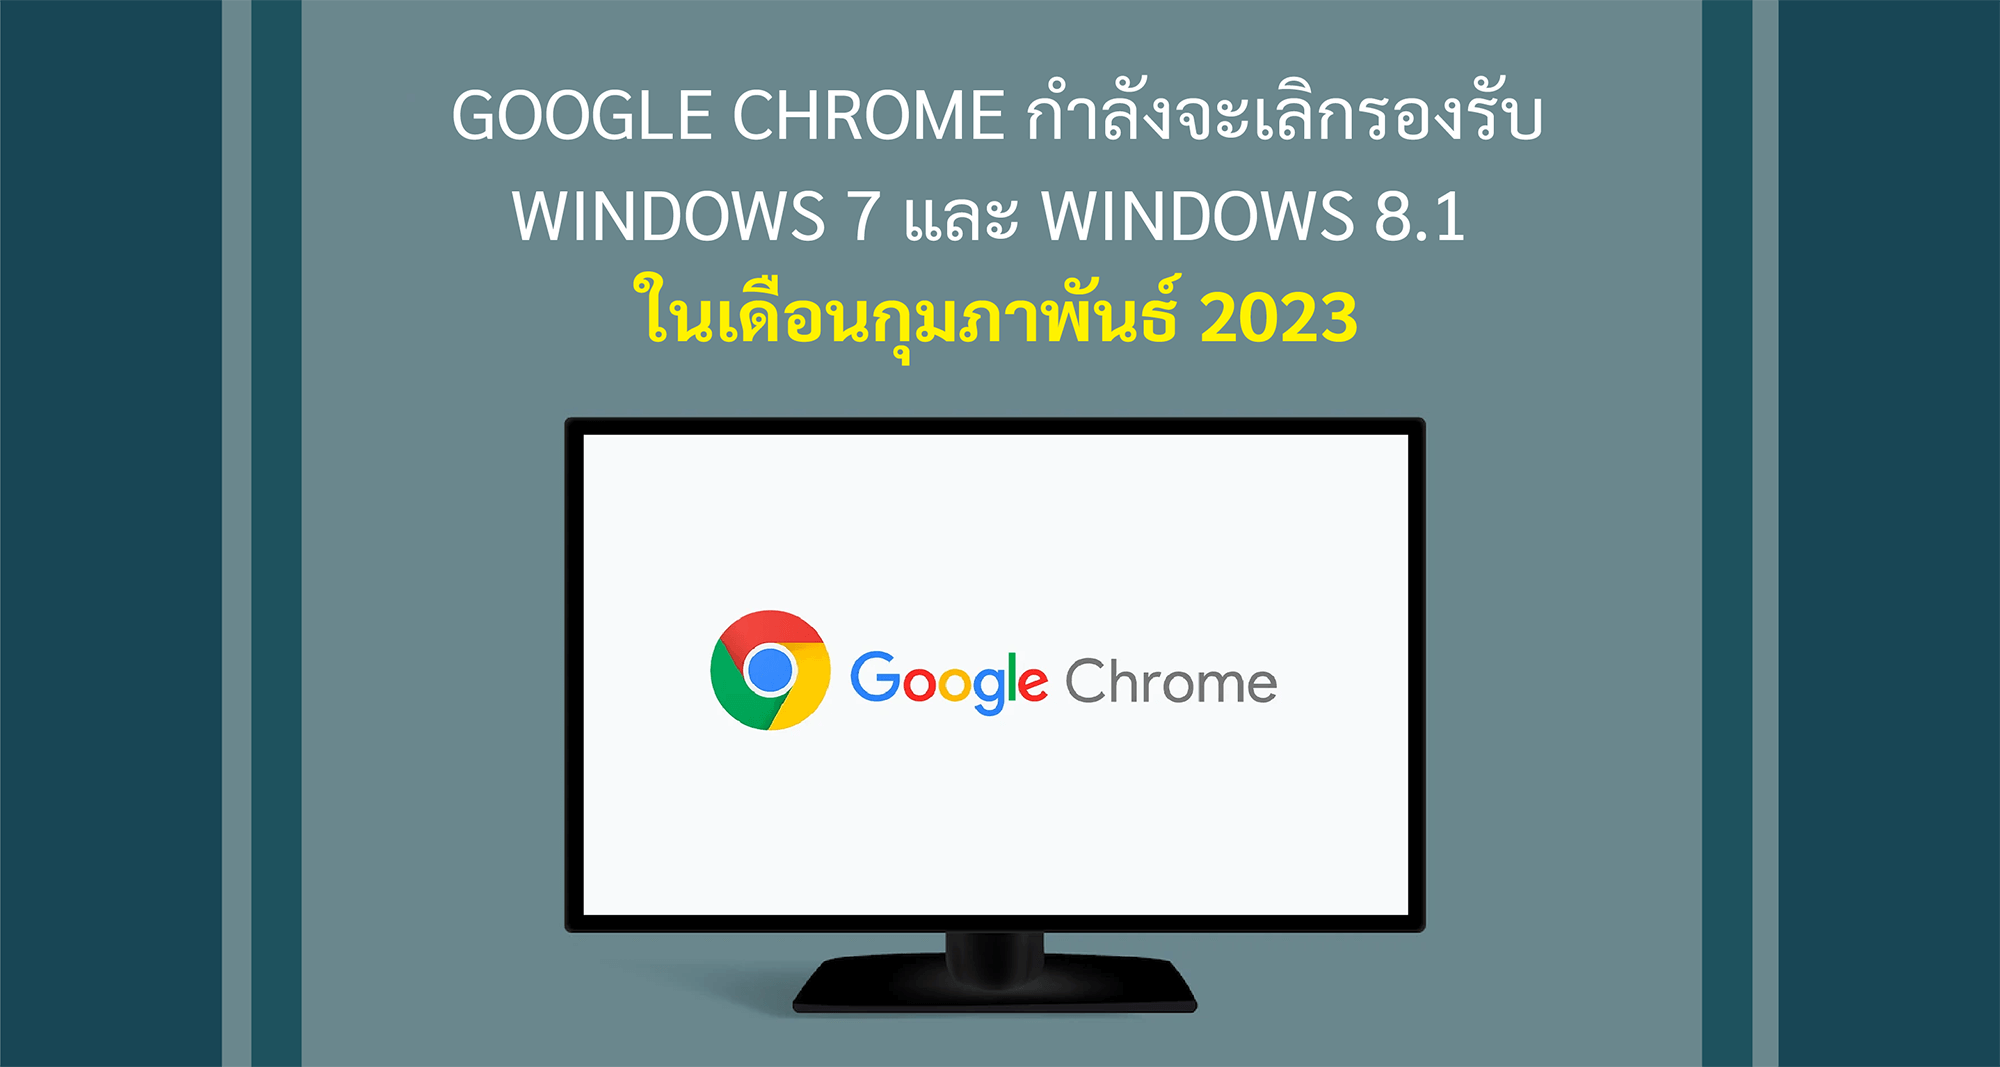 Google Chrome กำลังจะเลิกรองรับ Windows 7 และ Windows 8.1  ในเดือนกุมภาพันธ์ 2023